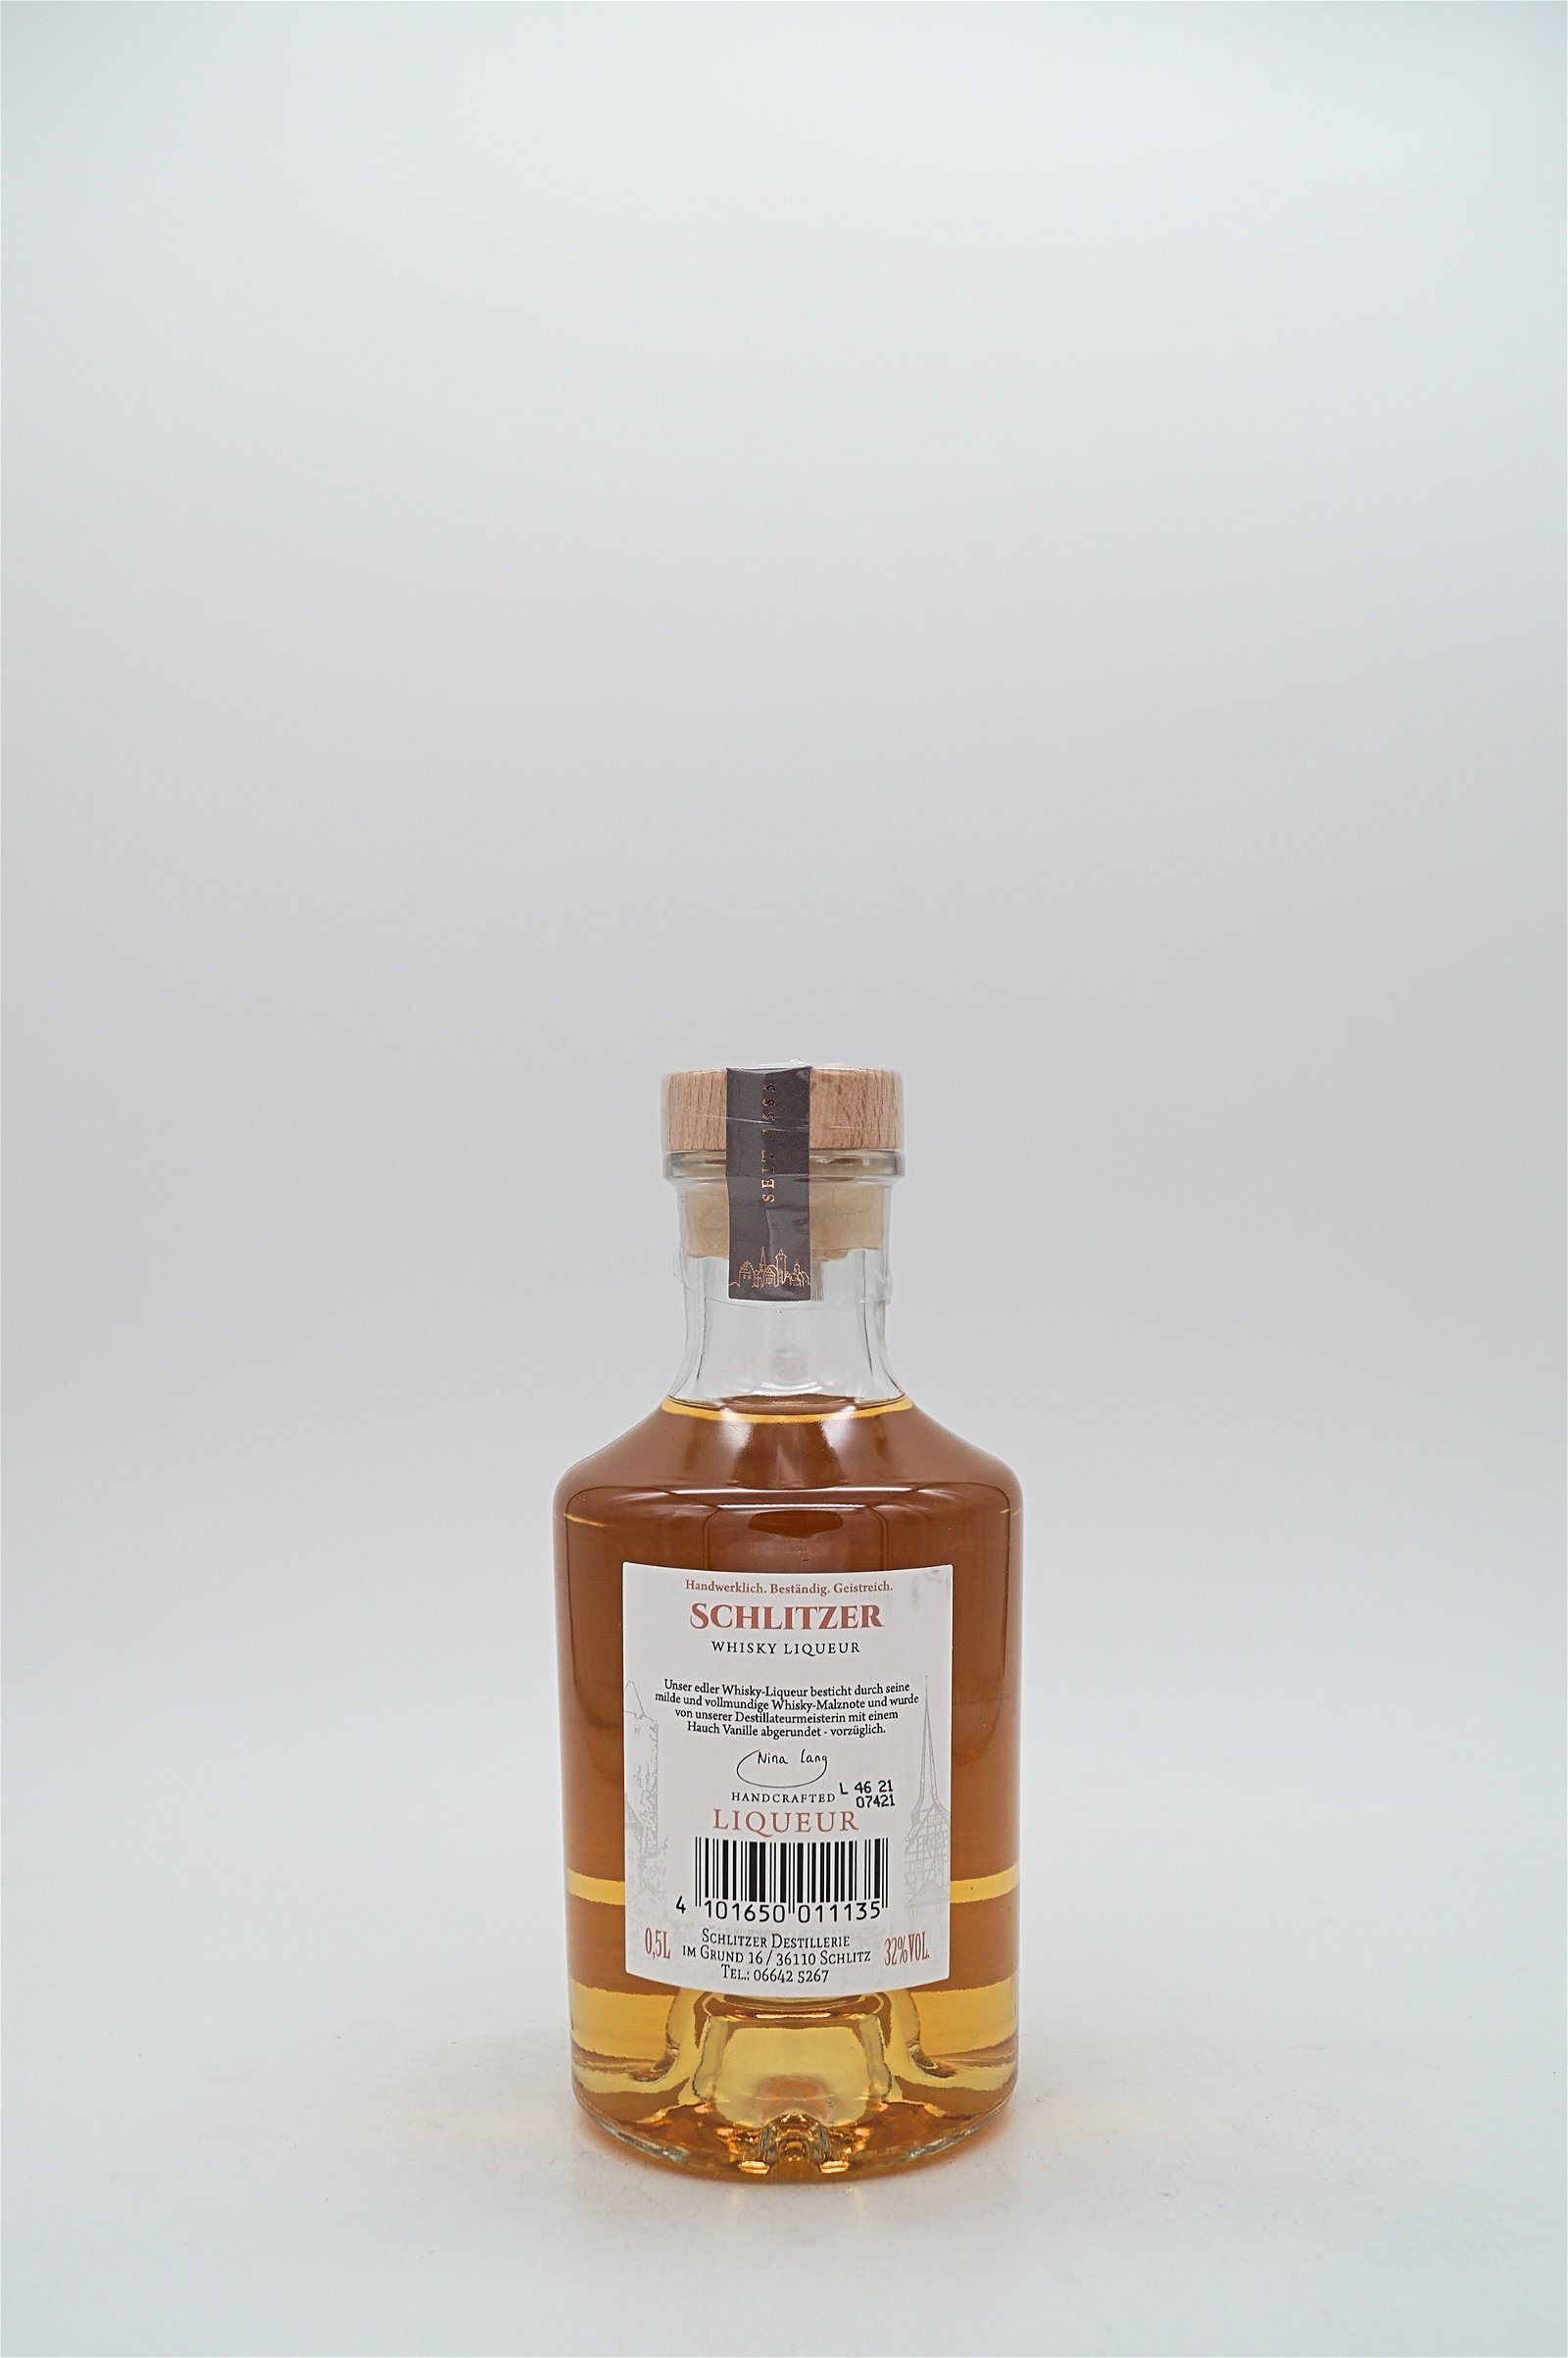 Schlitzer Destillerie Whisky Liqueur